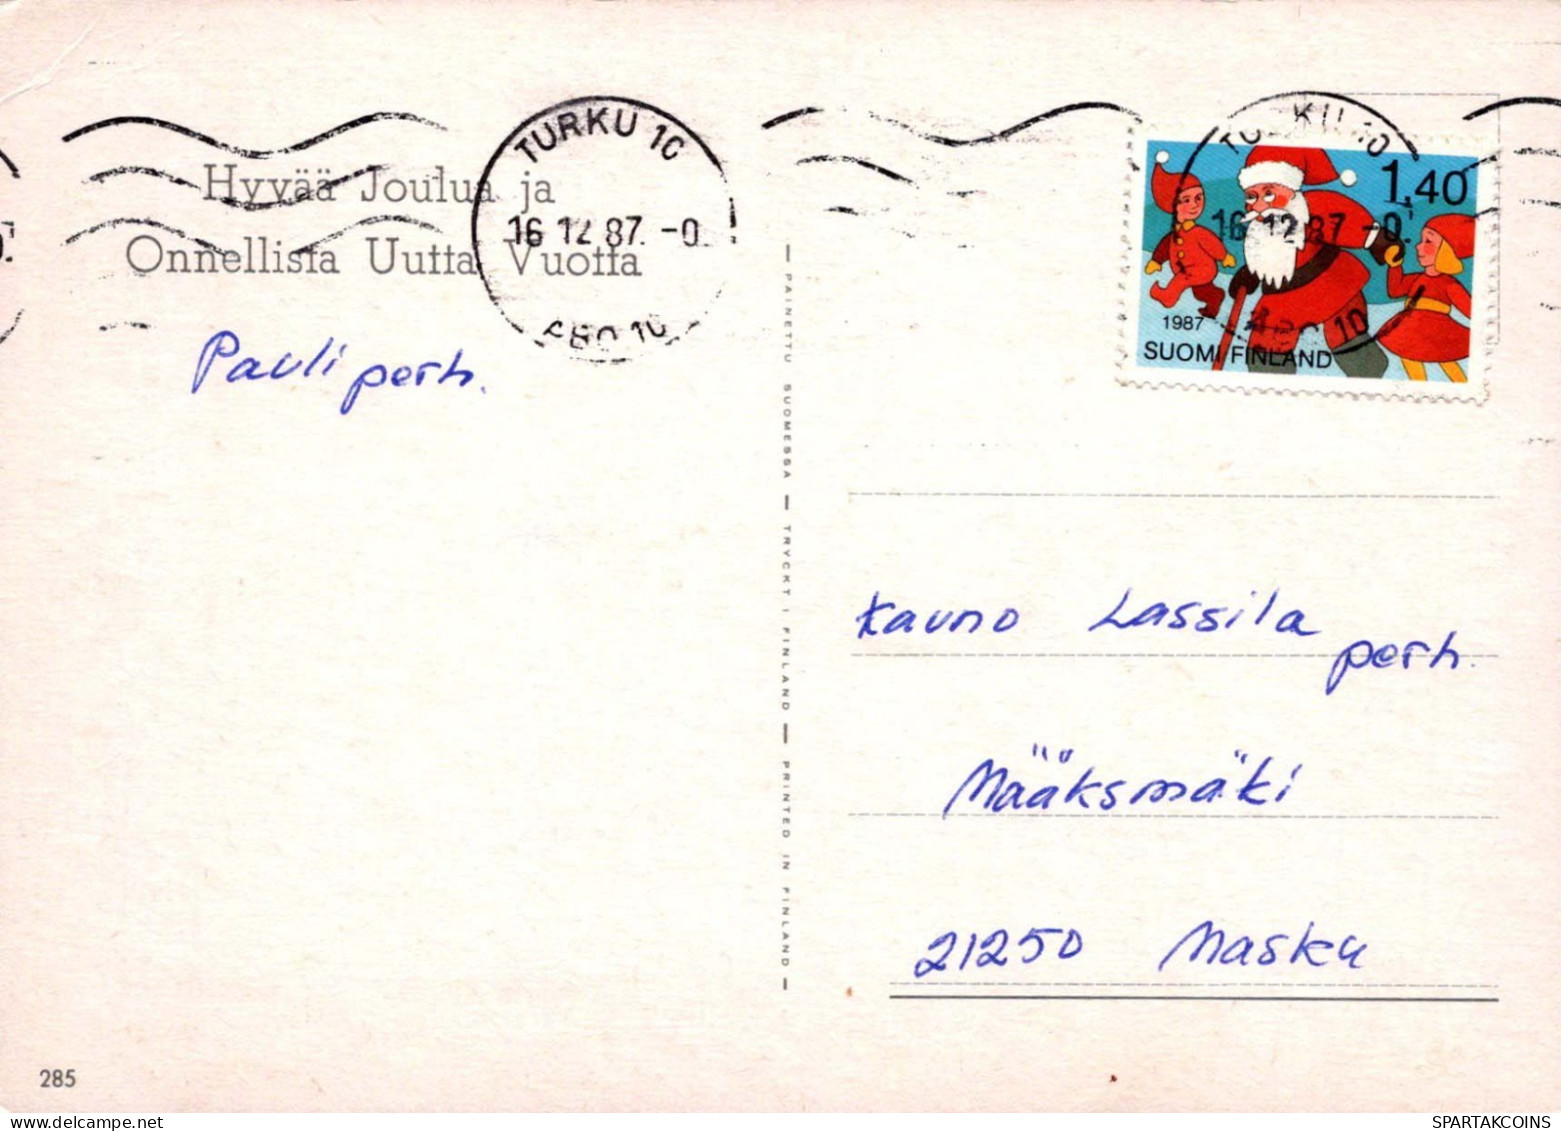 ANGEL Christmas Vintage Postcard CPSM #PBP407.A - Angels